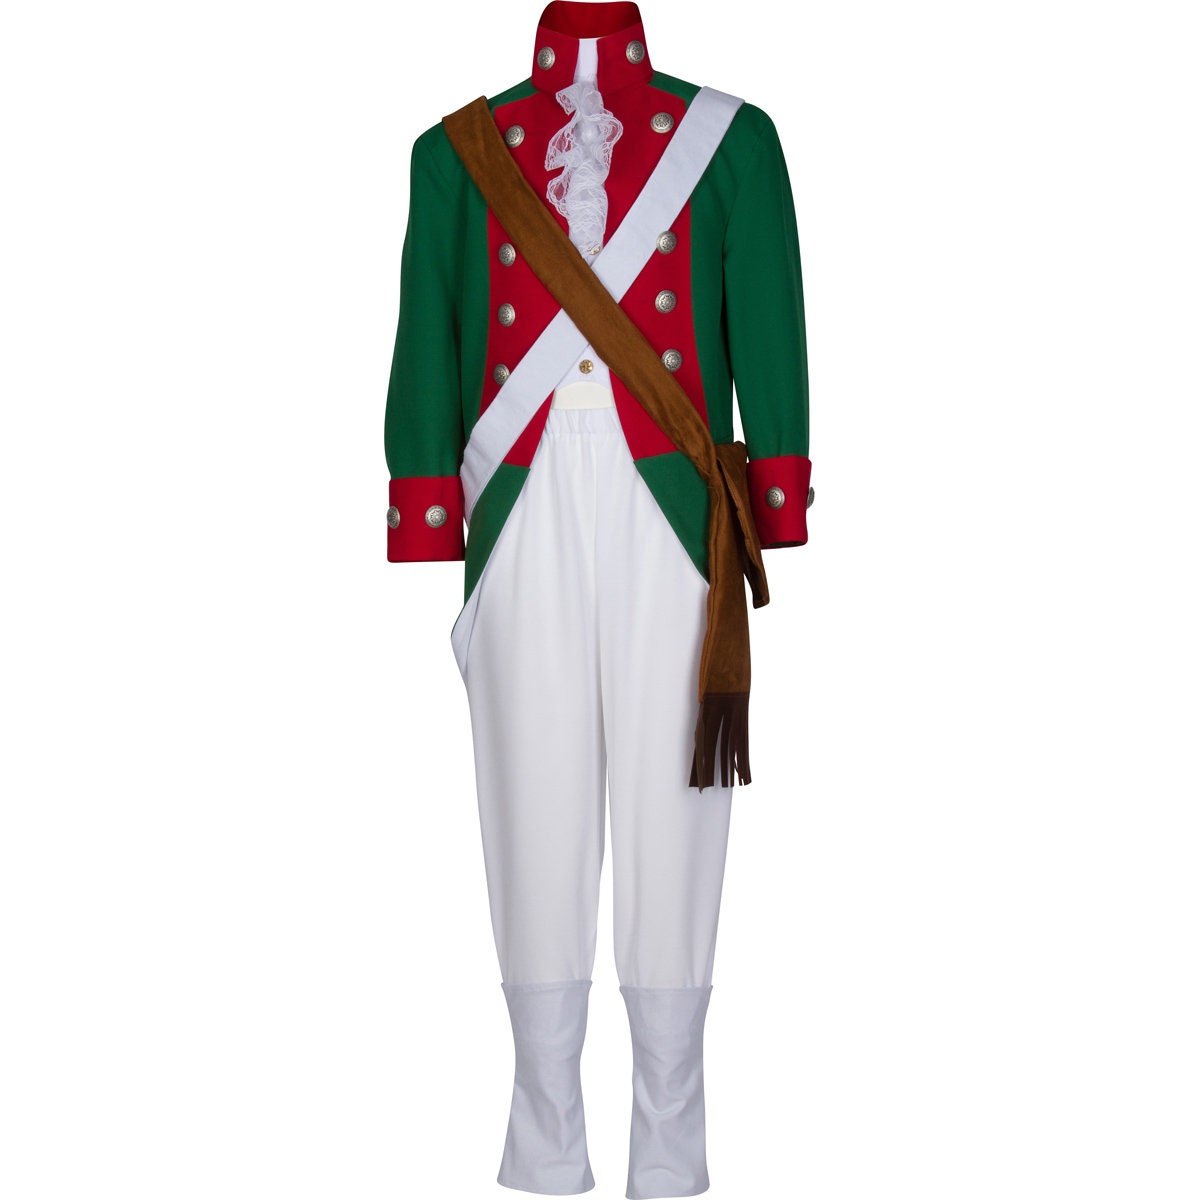 Deluxe Children's American Revolutionary War Continental Marine Corps Uniform Jacket